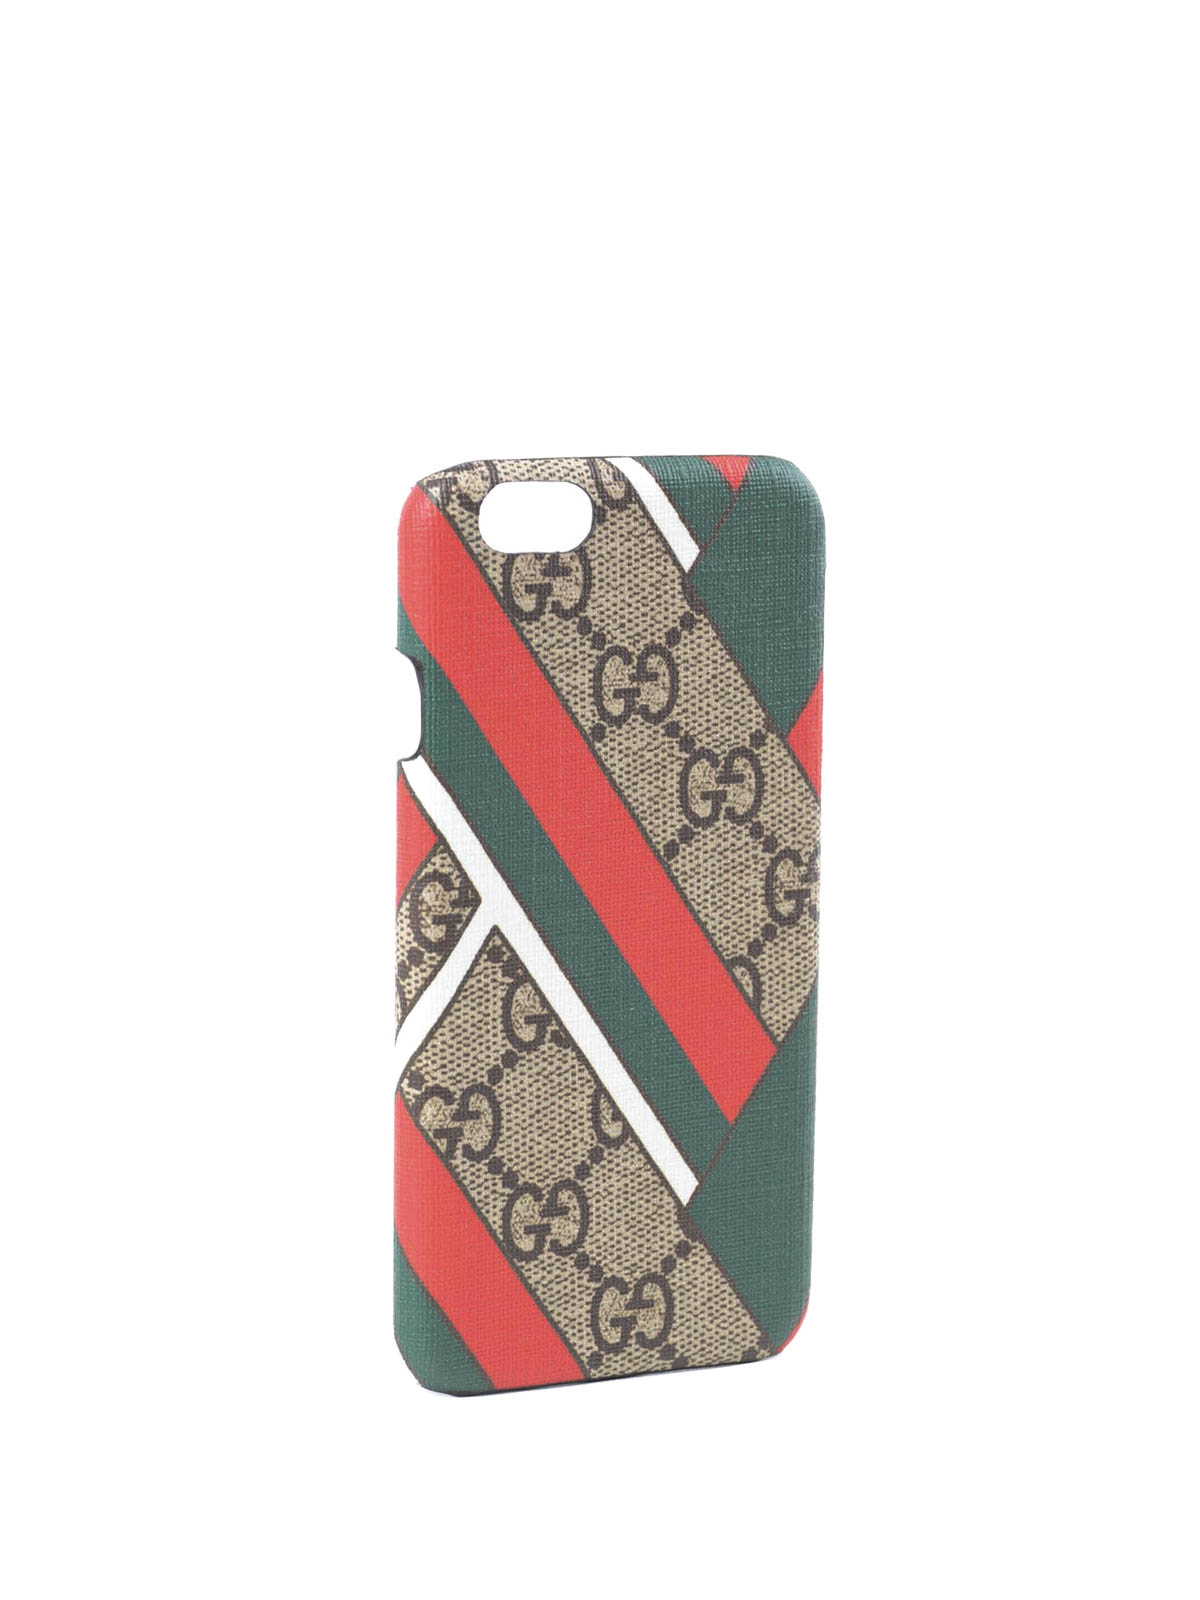 & Covers Gucci - Chevron print iPhone 6 cover - 429237K1M008573